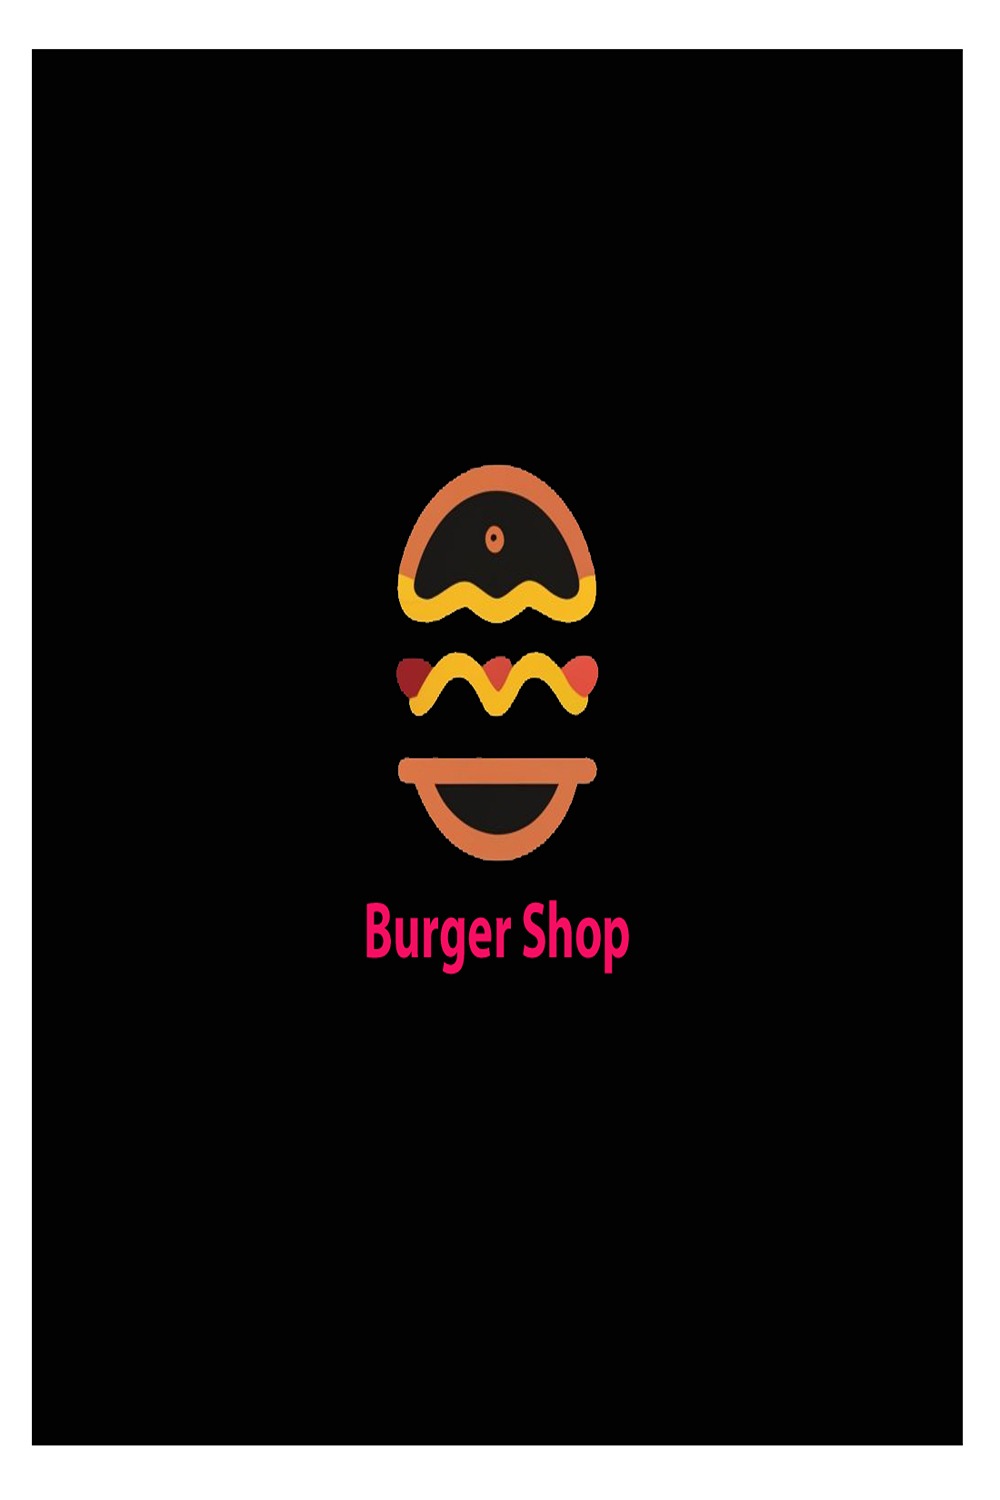 Burger Shop - Logo Design Template pinterest preview image.